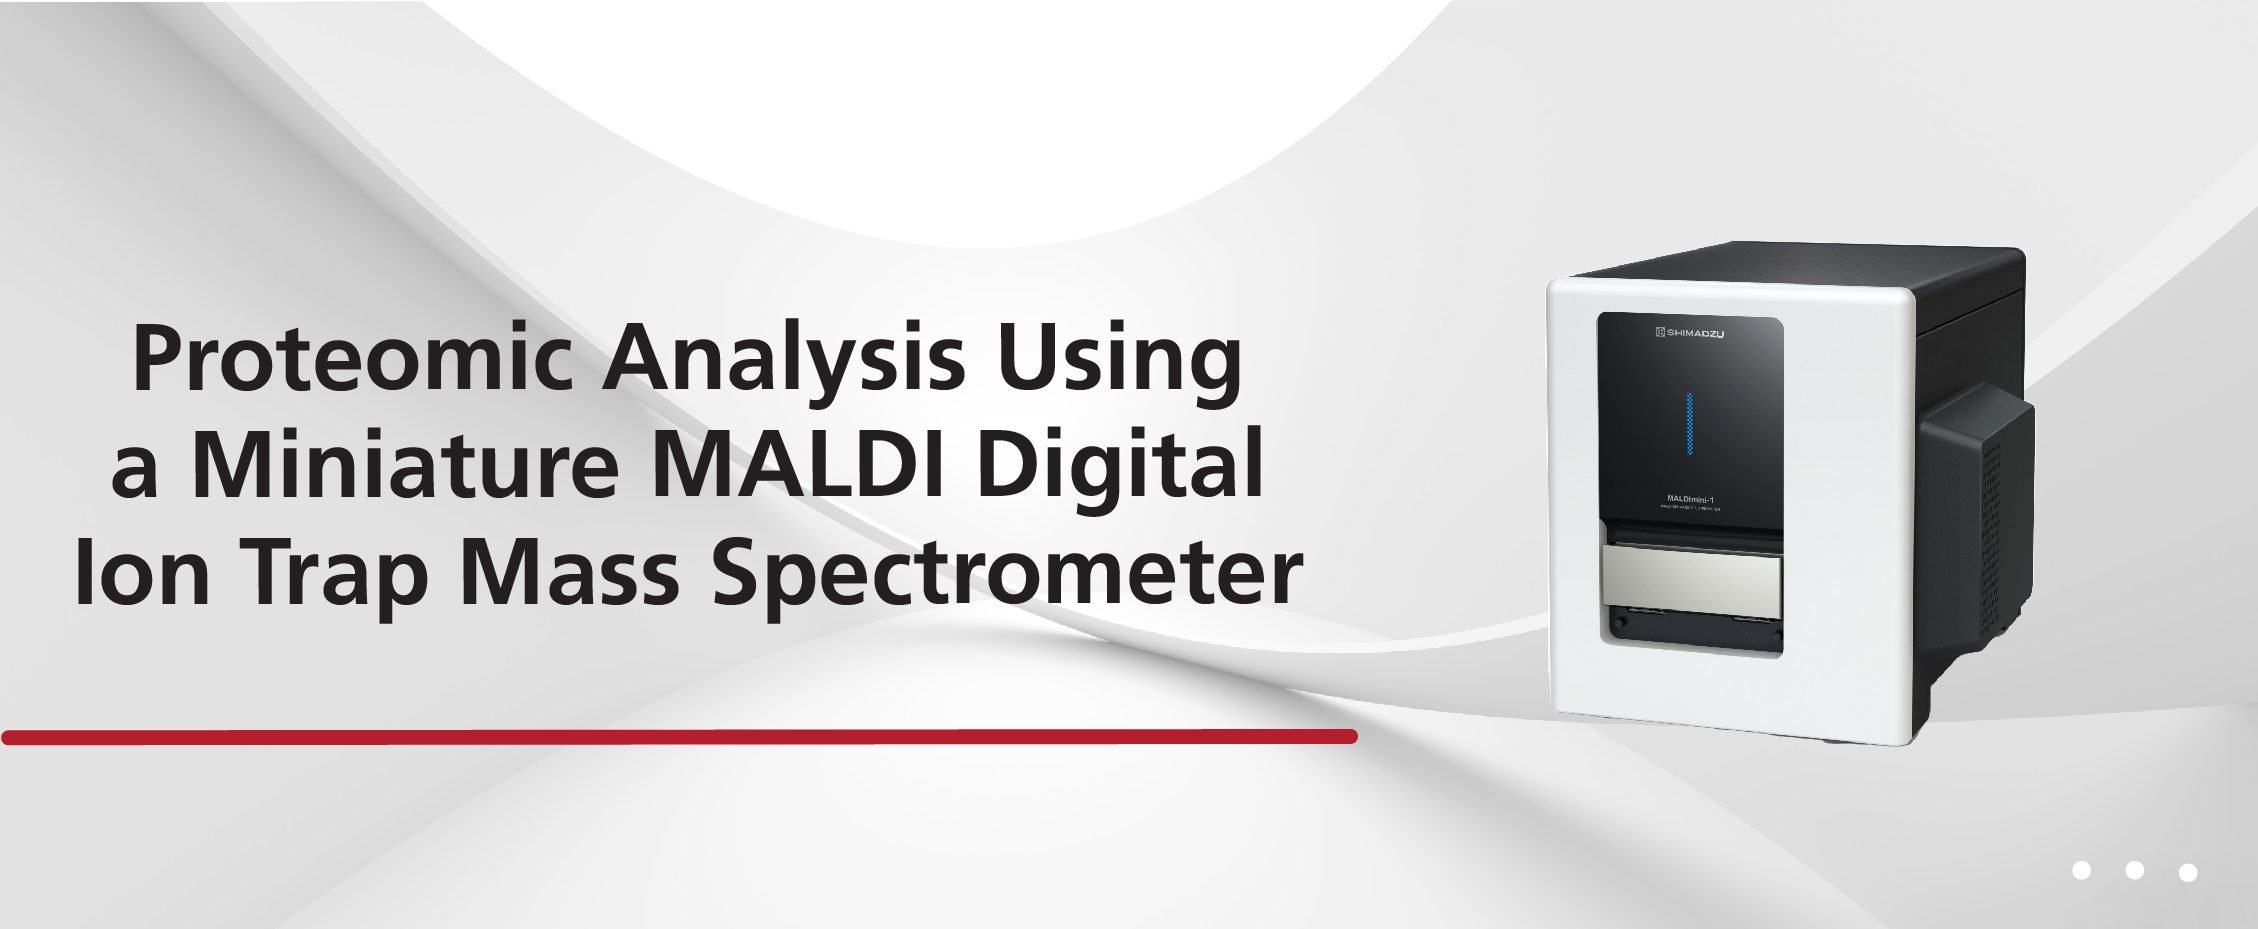 Proteomic Analysis Using a Miniature MALDI Digital Ion Trap Mass Spectrometer